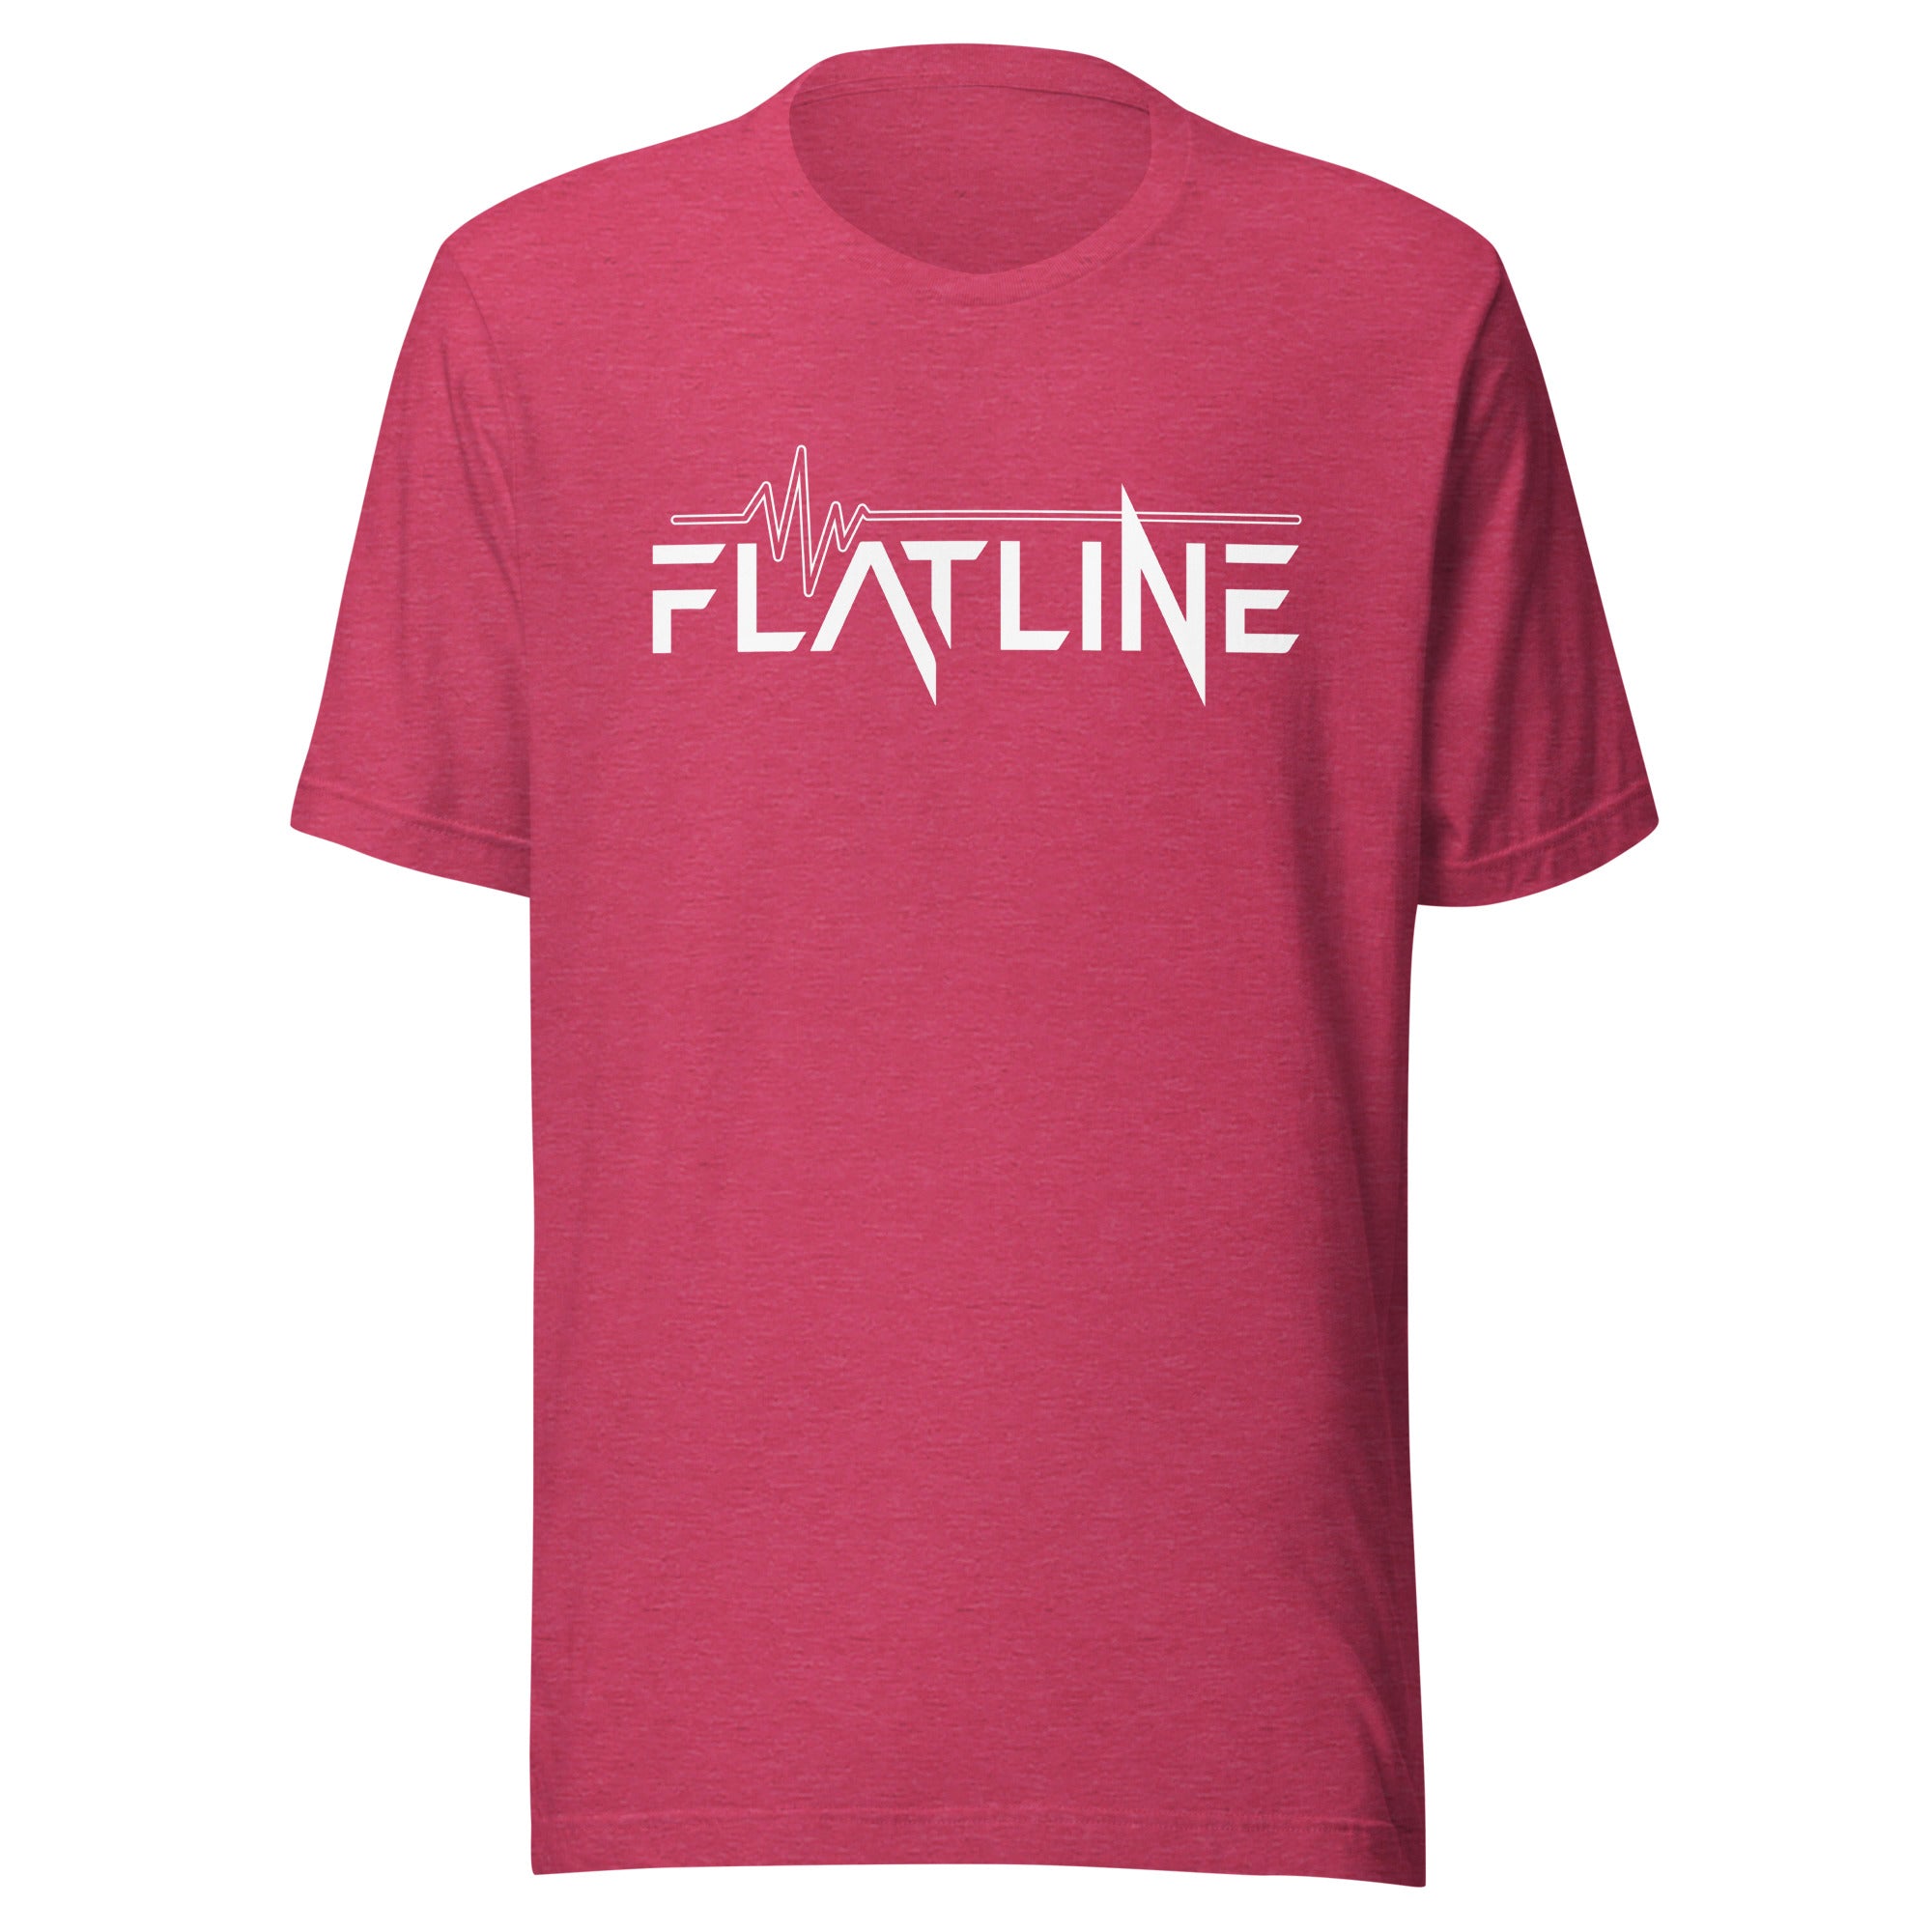 Kris Bourne - Flatline - Unisex t-shirt